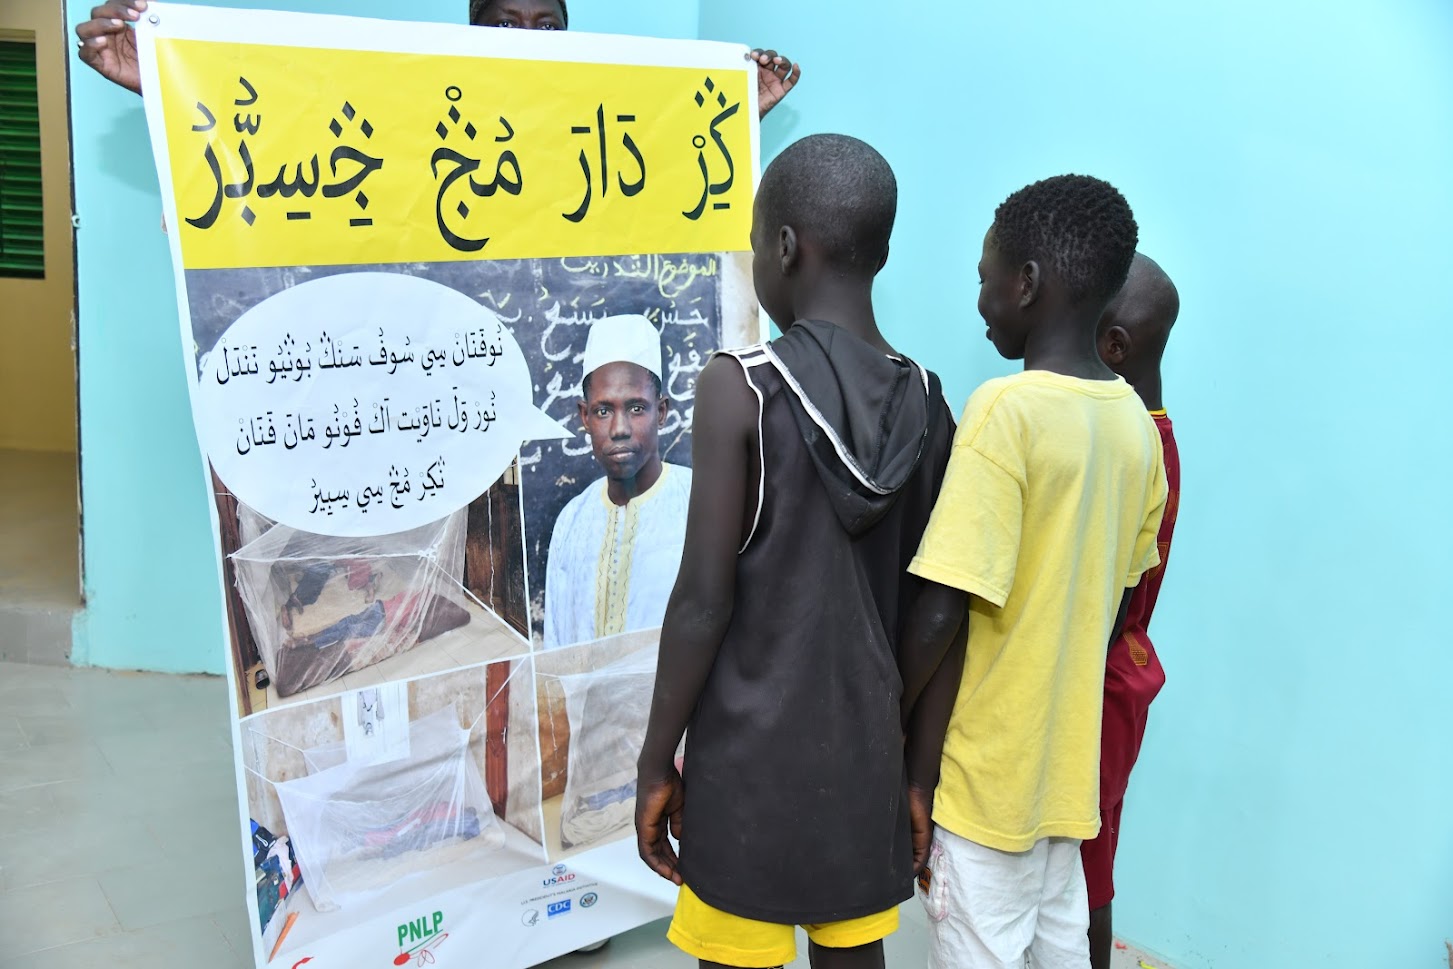 Talibé children in front of the poster in Wolof written in Arabic.